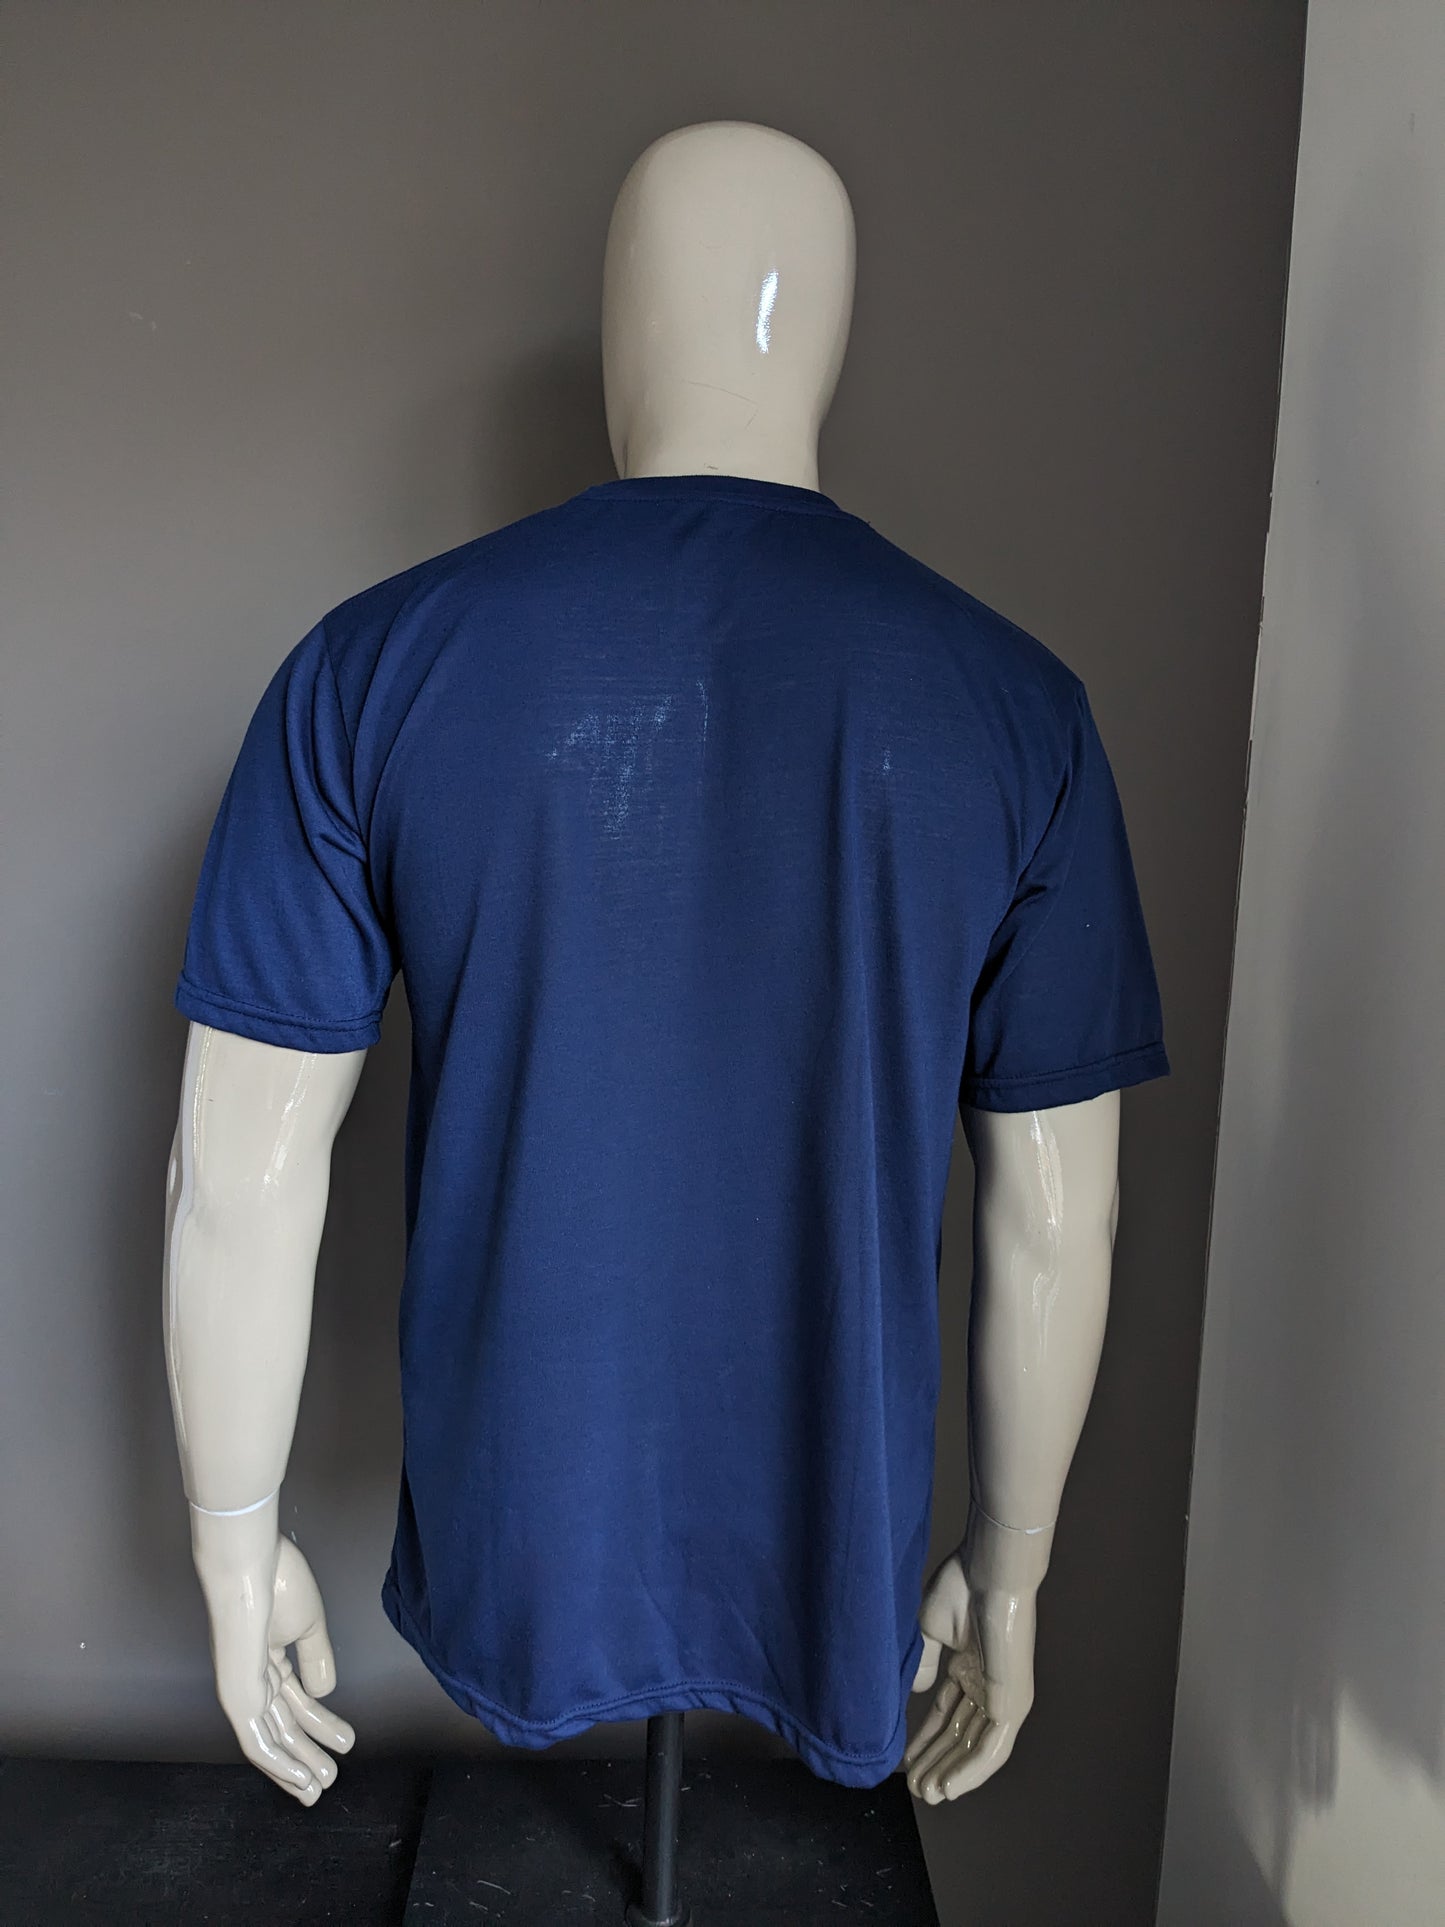 Donkerblauw shirt met uil opdruk. Maat XL.